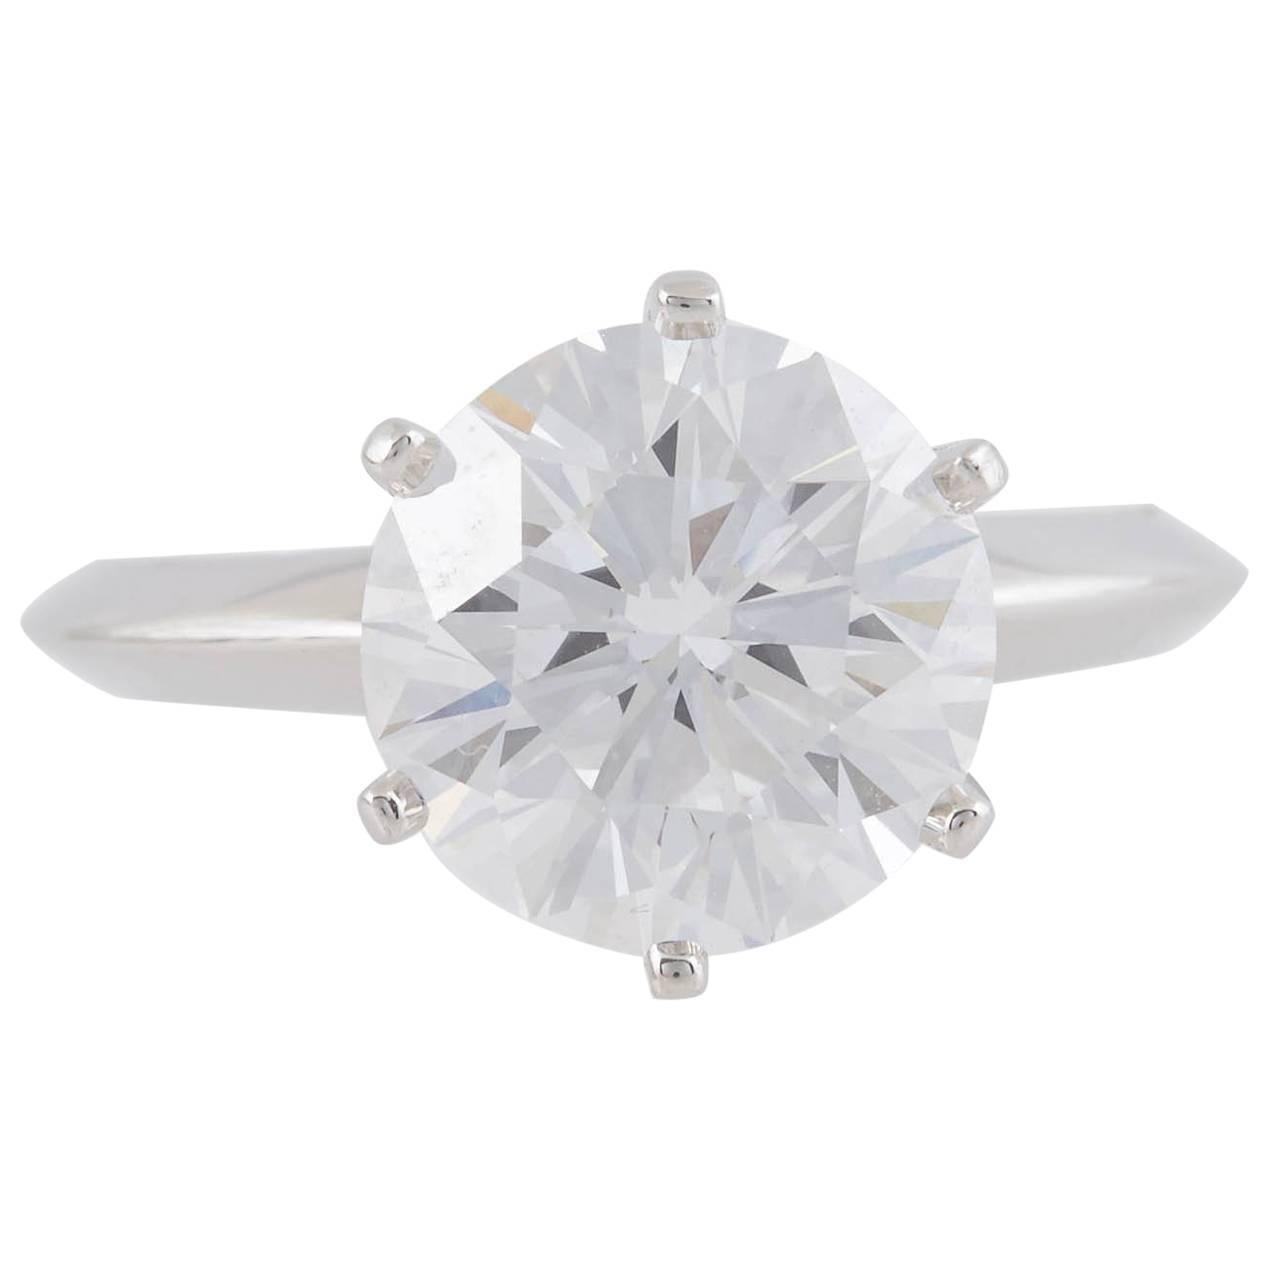 Tiffany & Co. 3.04 Carat Diamond Engagement Ring